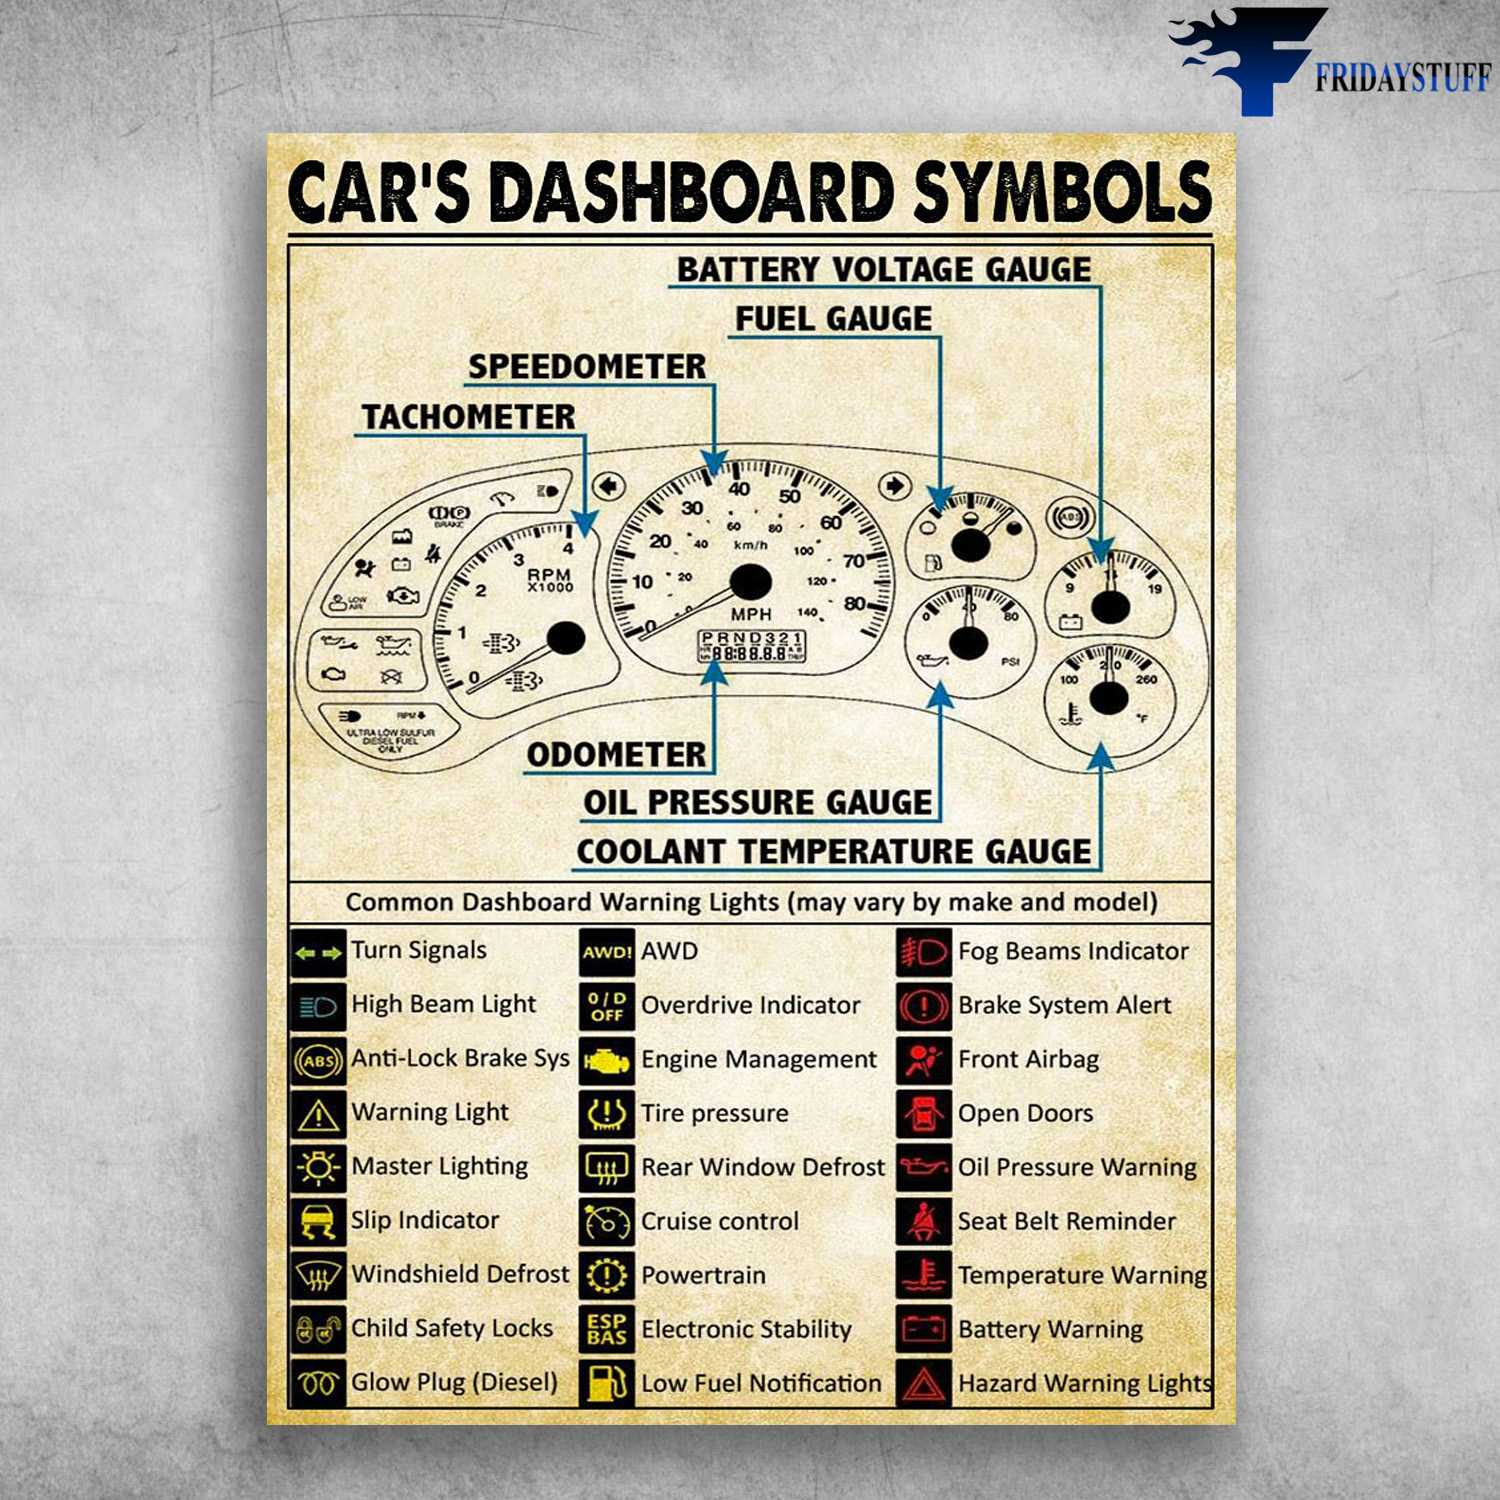 Car's Dashboard Symbols, Battery Voltage Gauge, Fuel Gauge, Speedometer, Tachometer, Odometer, Oil Pressure Gauge, Coolant Temperature Gauge